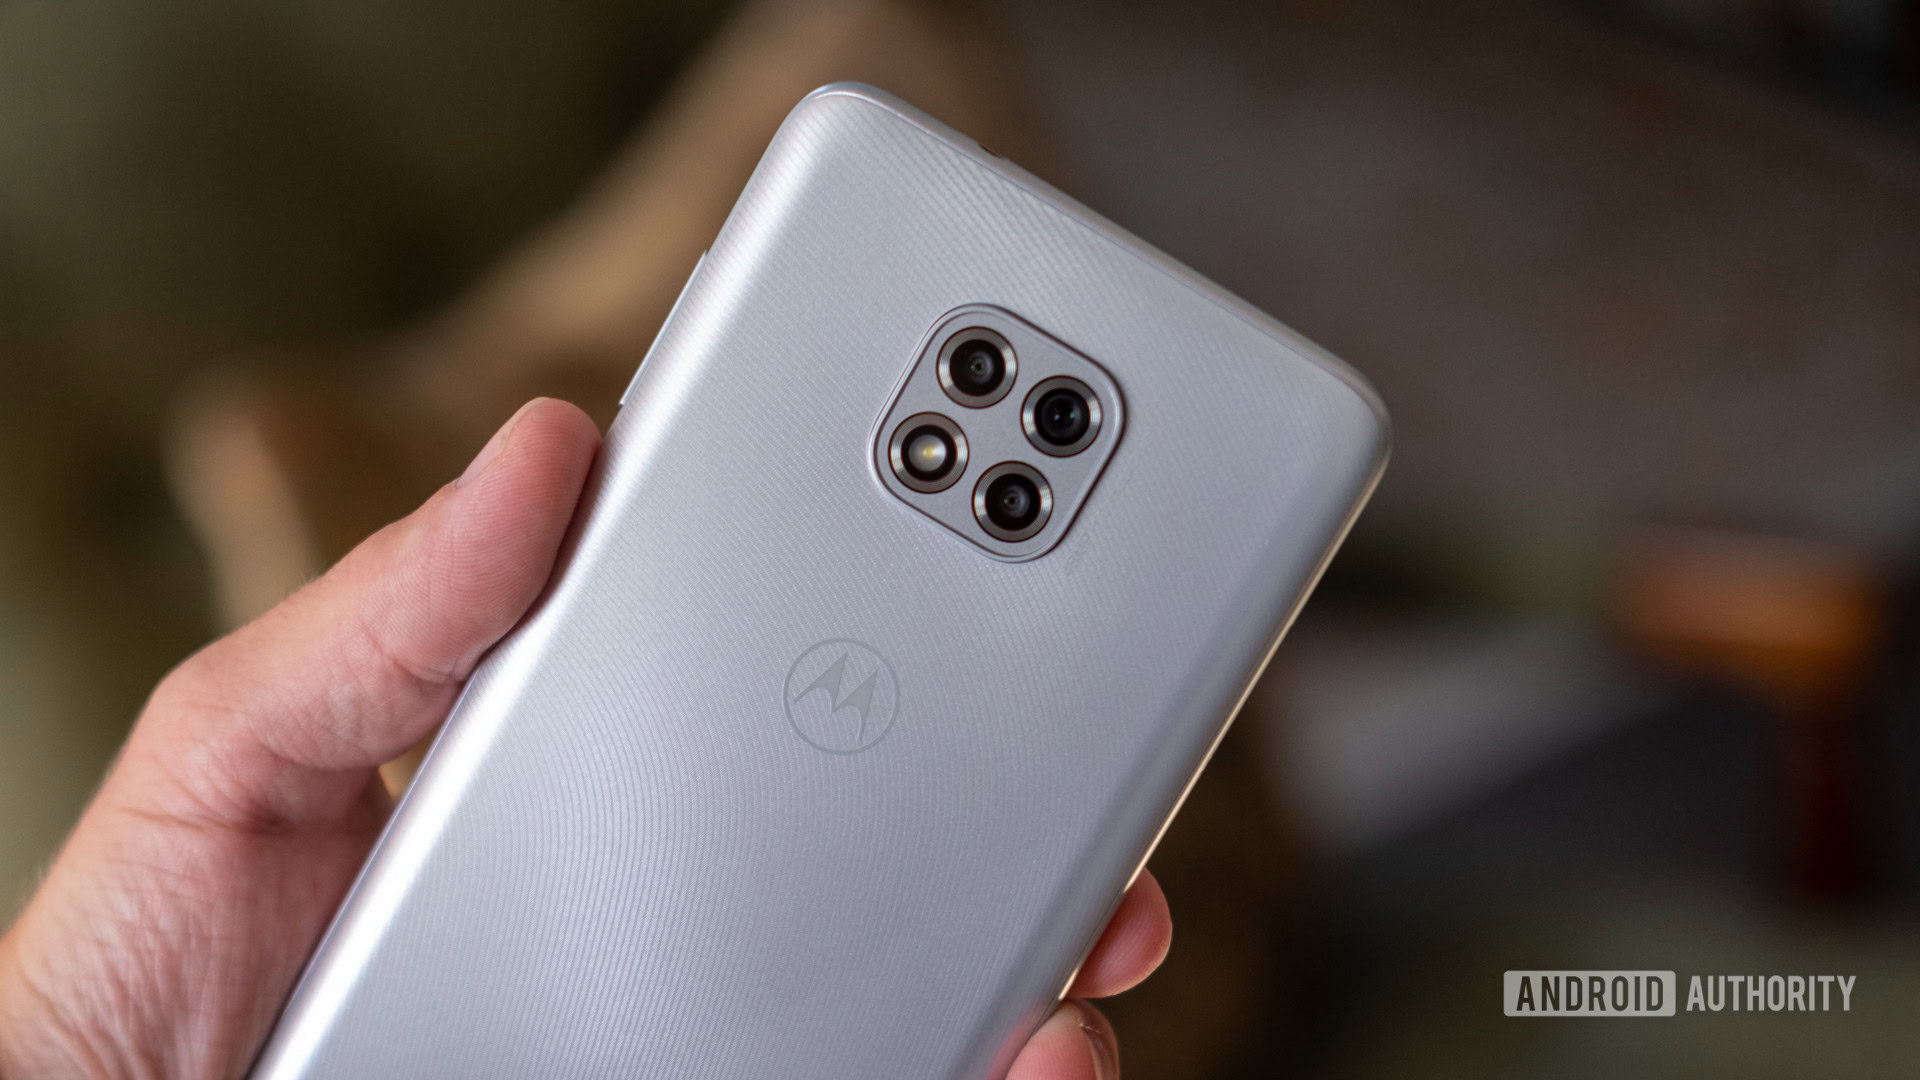 Hard reset Motorola Moto G4 Play - Force restore